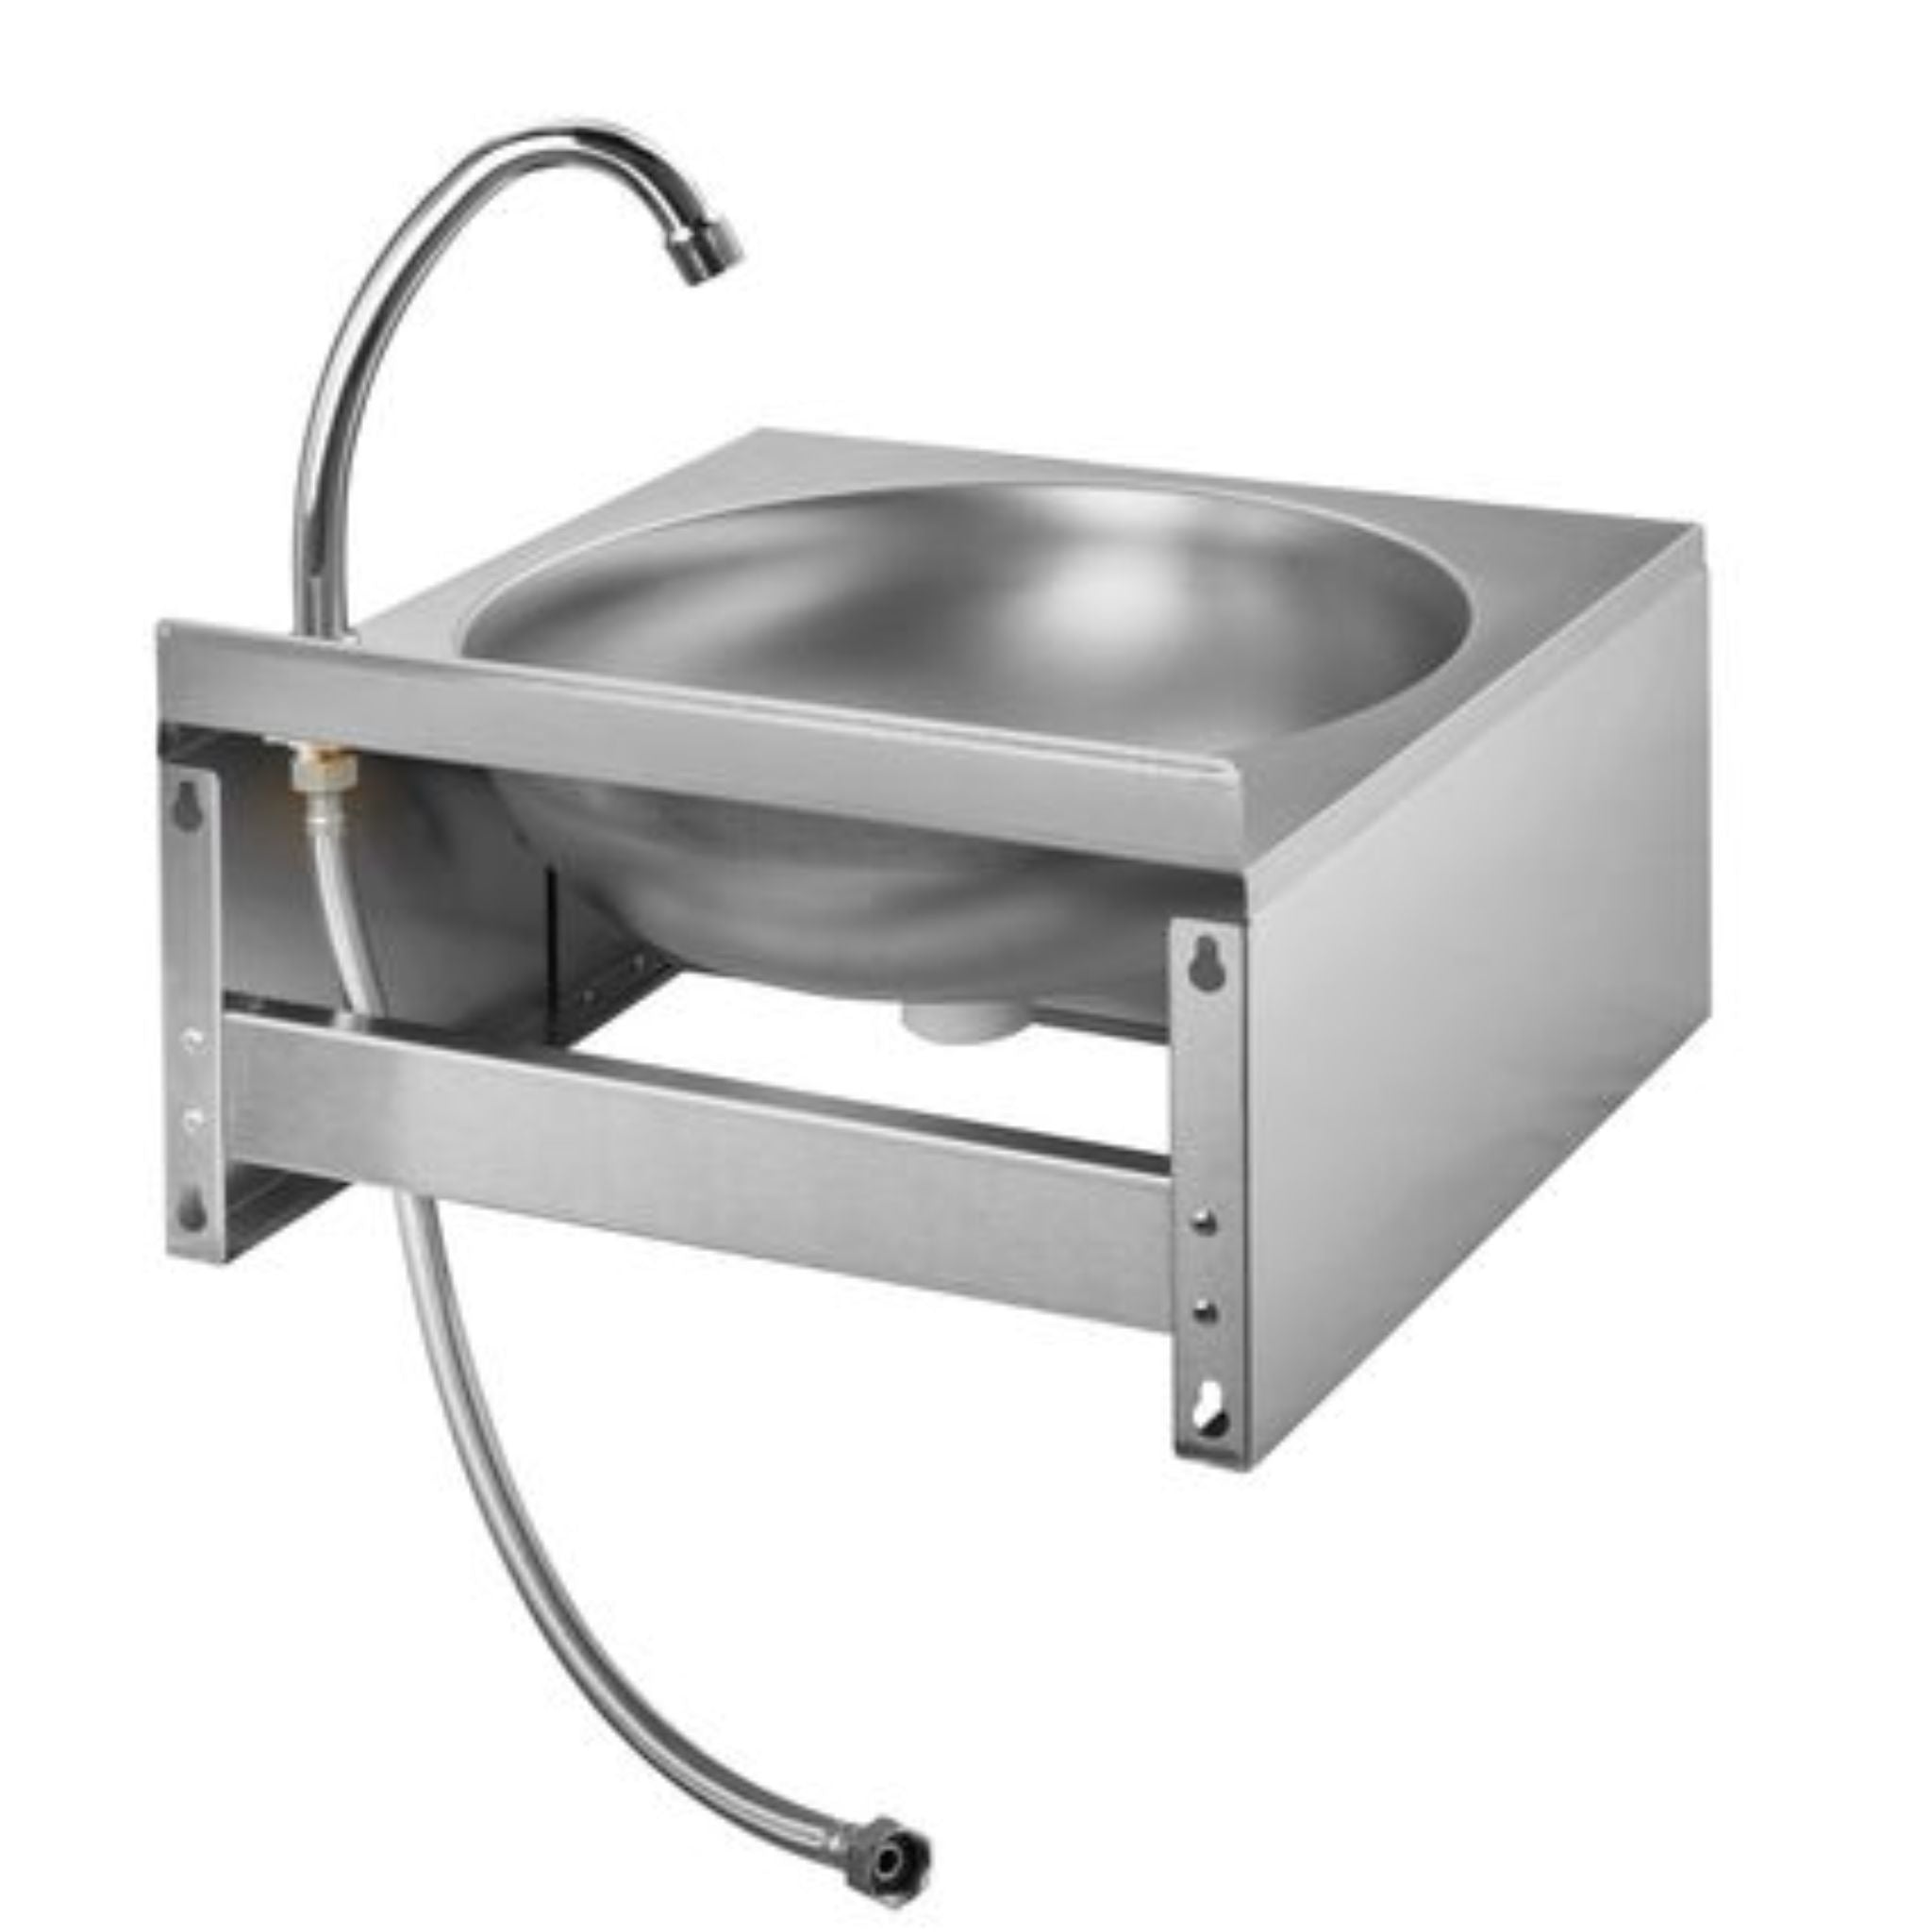 Standard stainless steel wash hand basin